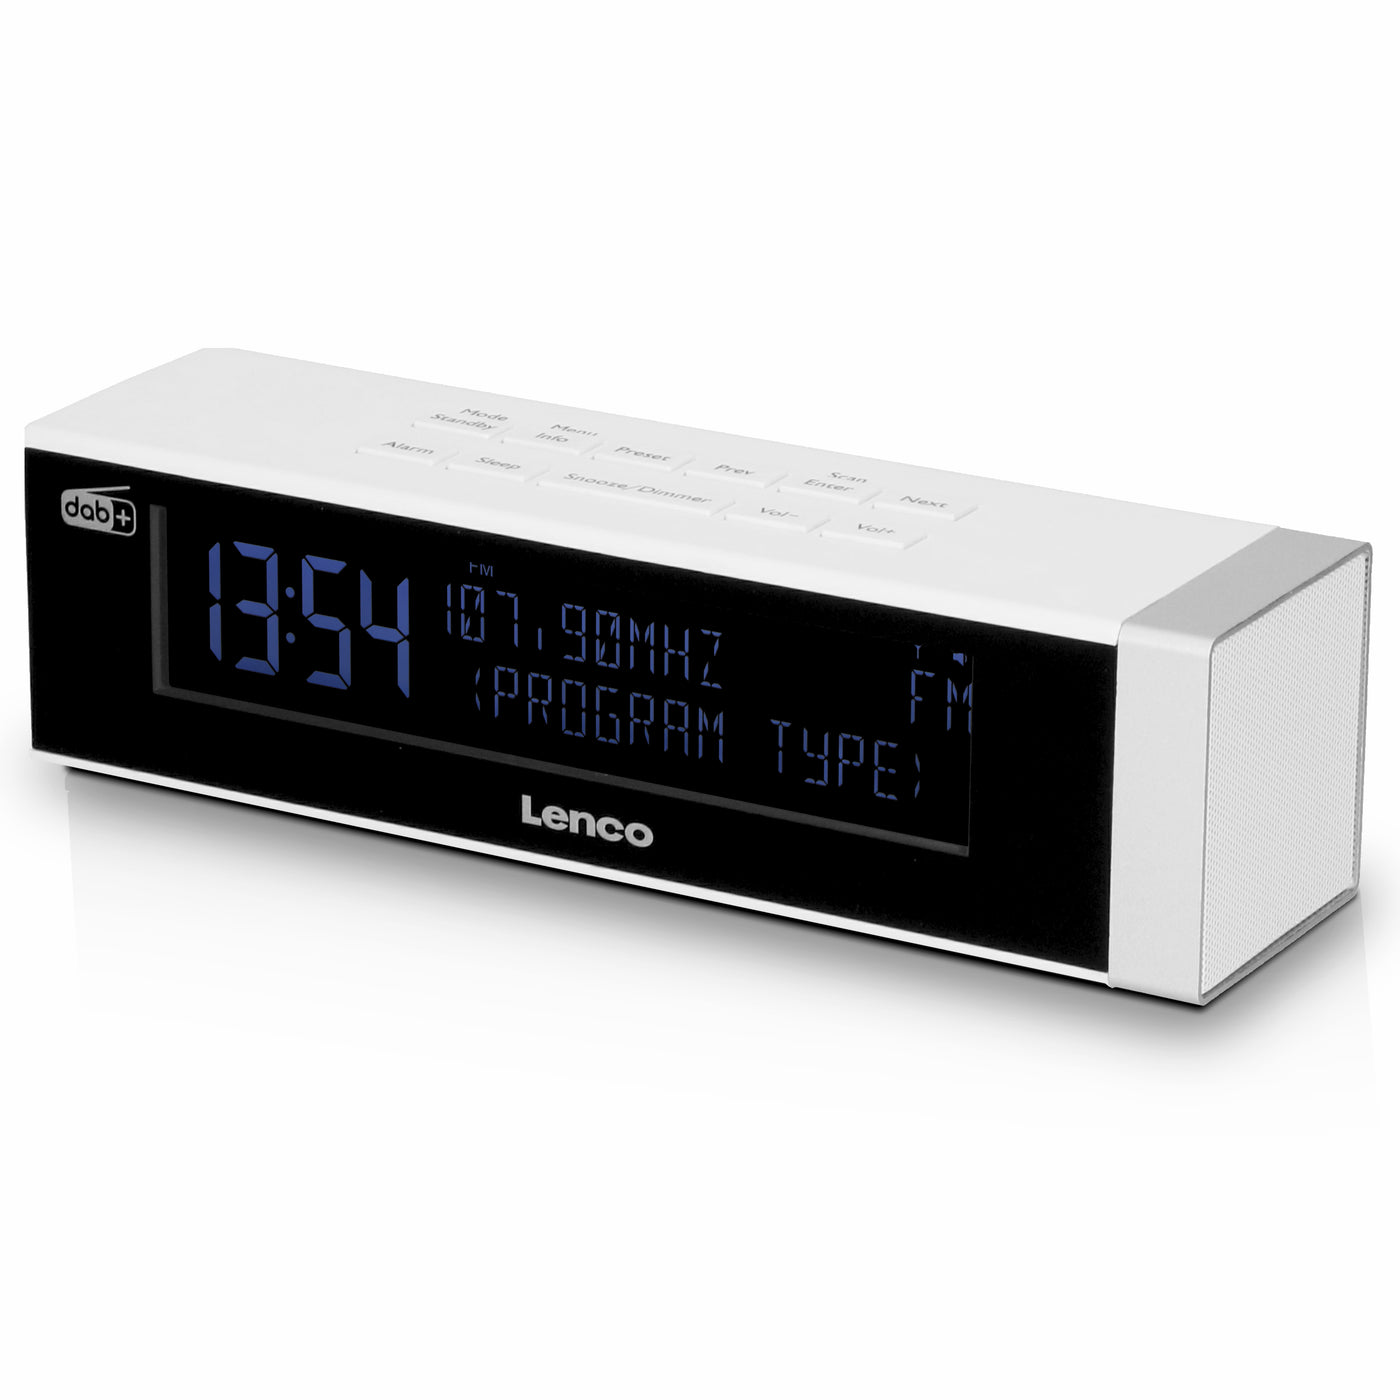 Lenco CR-630WH - Stereo DAB+/FM Radio clock – AUX-inpu and USB-port Lenco-Catalog with